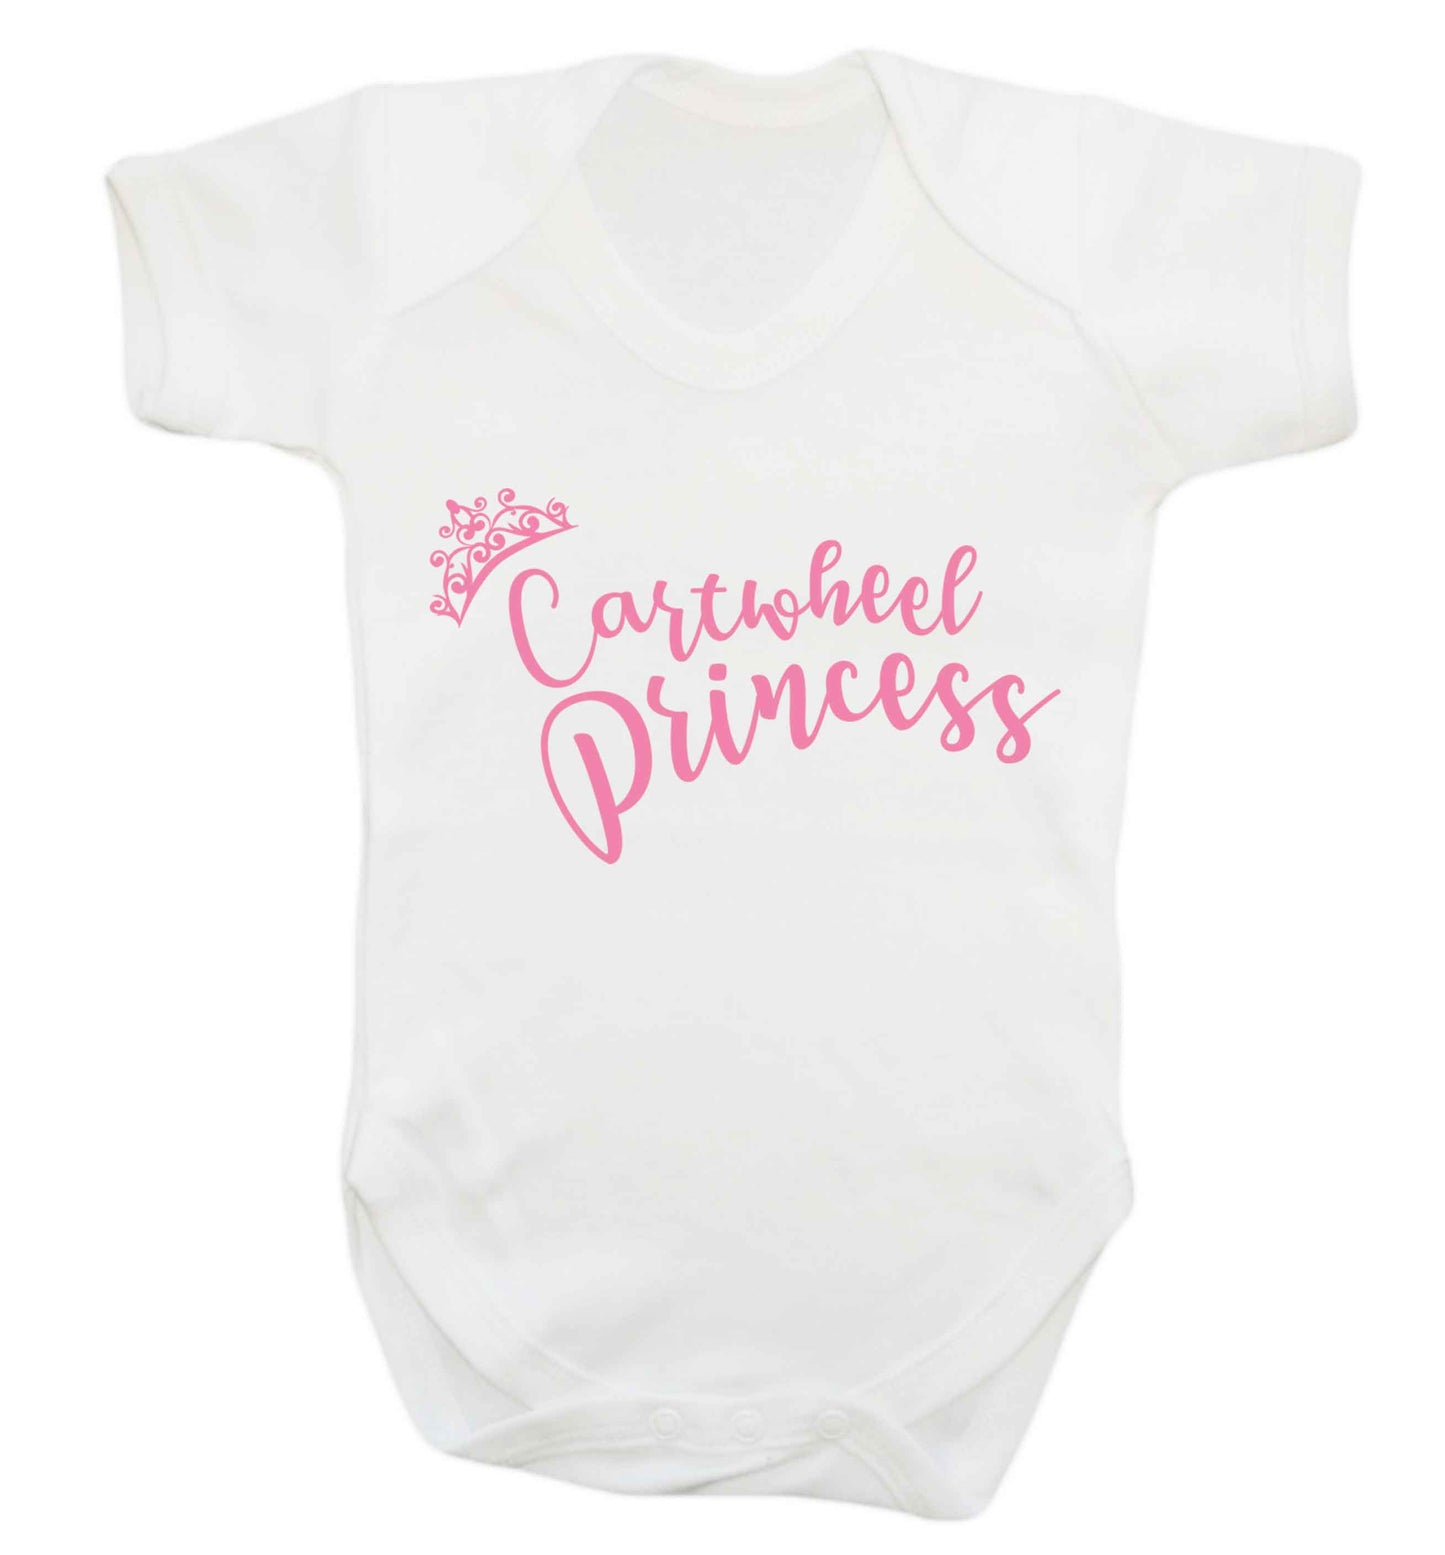 Cartwheel princess Baby Vest white 18-24 months